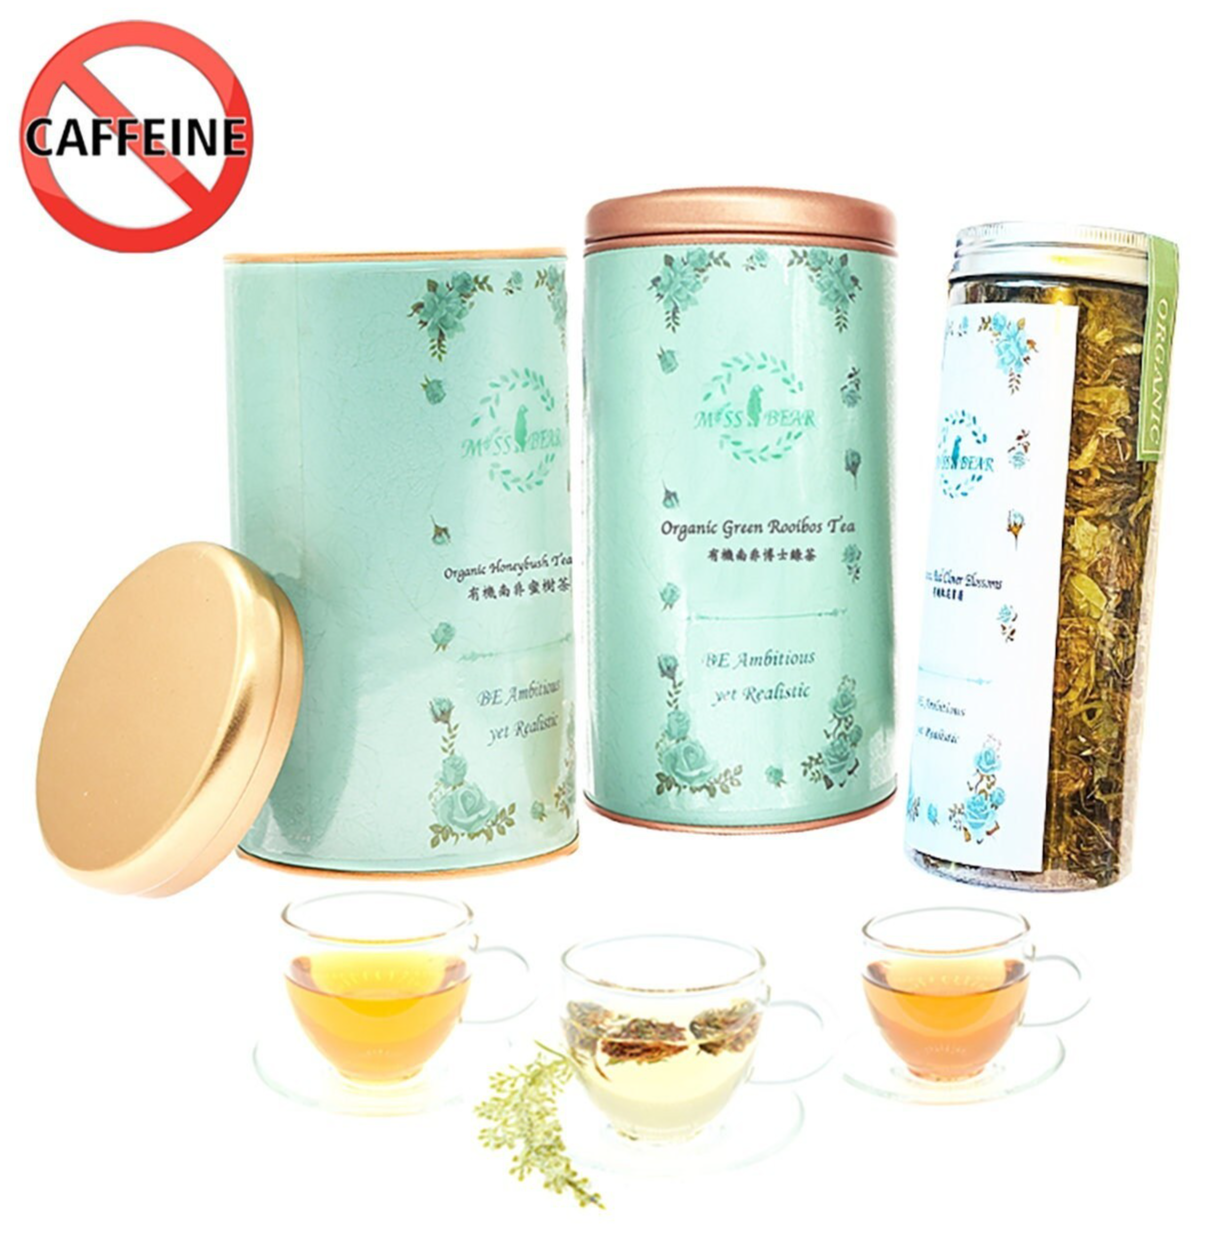 Primary image for Caffeine Free Tea Set/Organic Green Rooibos Tea/Honeybush Tea/Red Clover Blossom